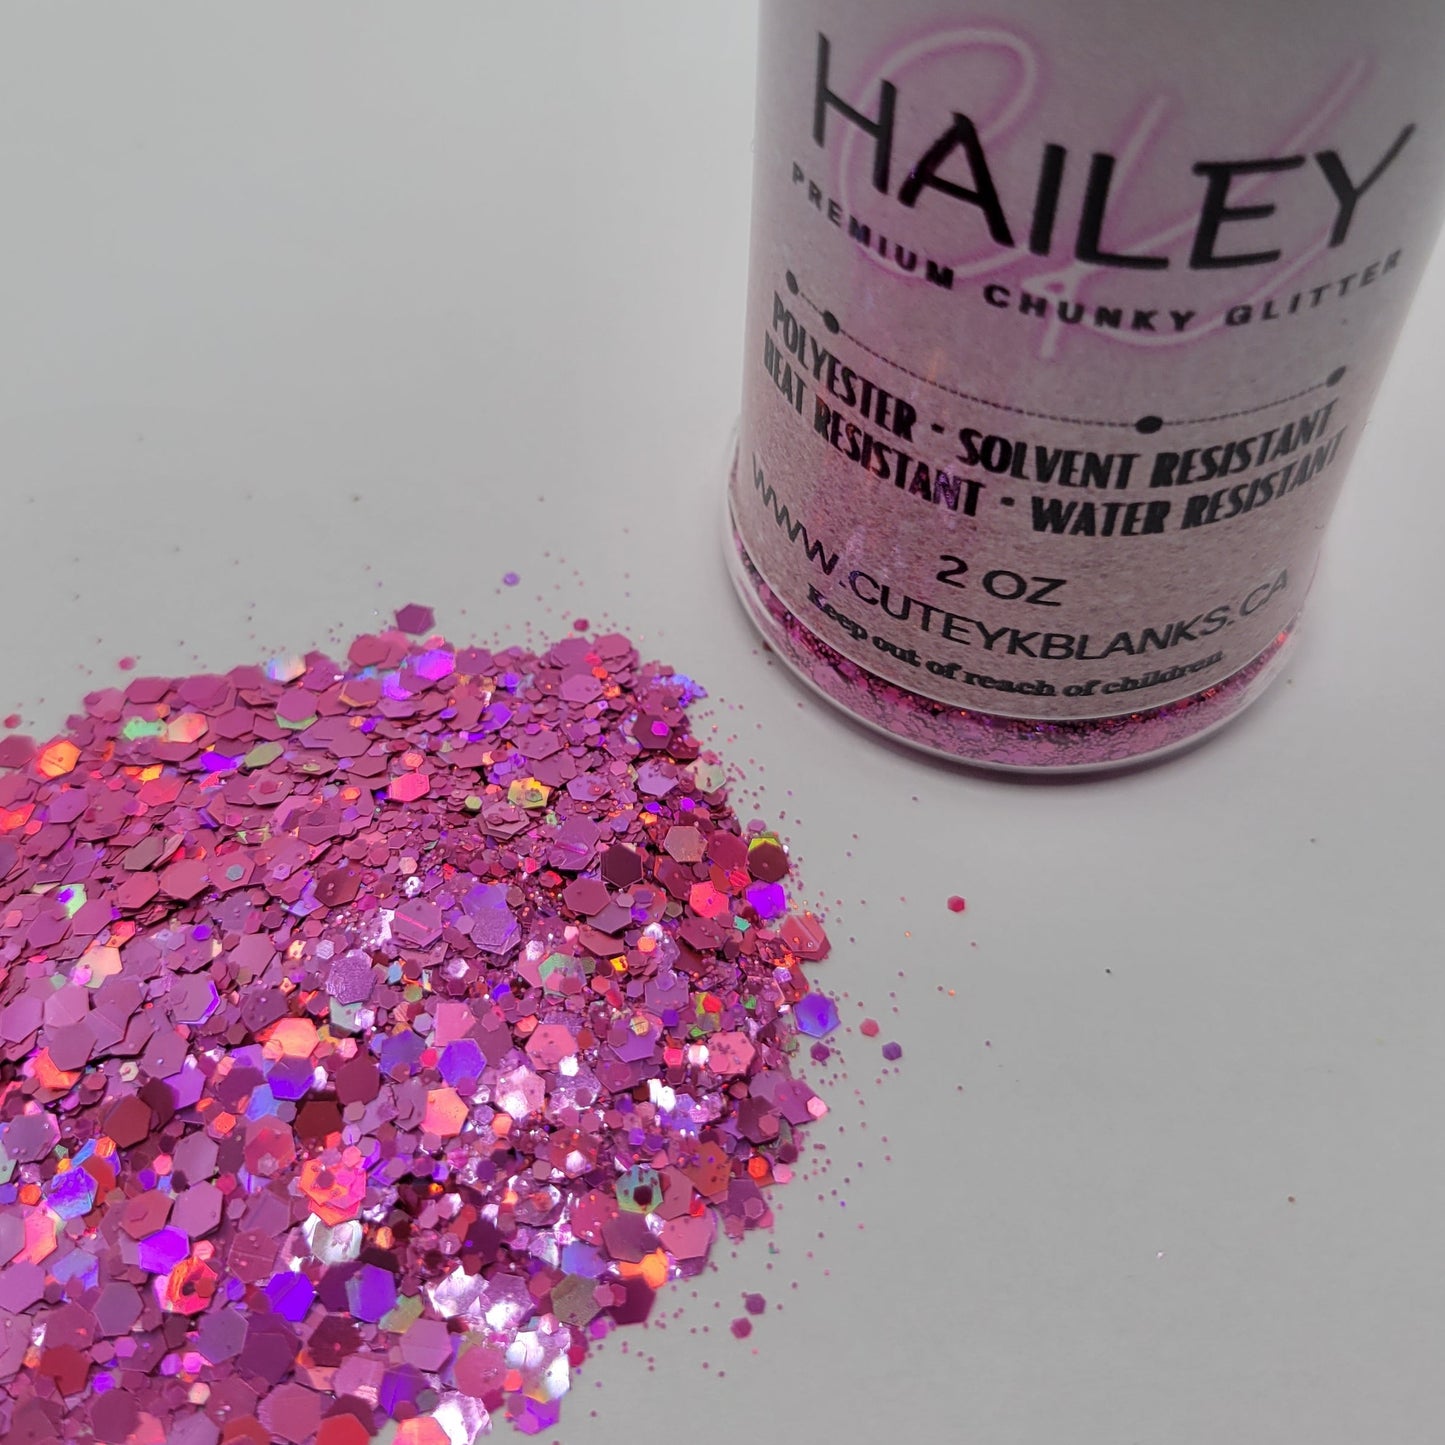 Hailey - Premium Chunky Glitter